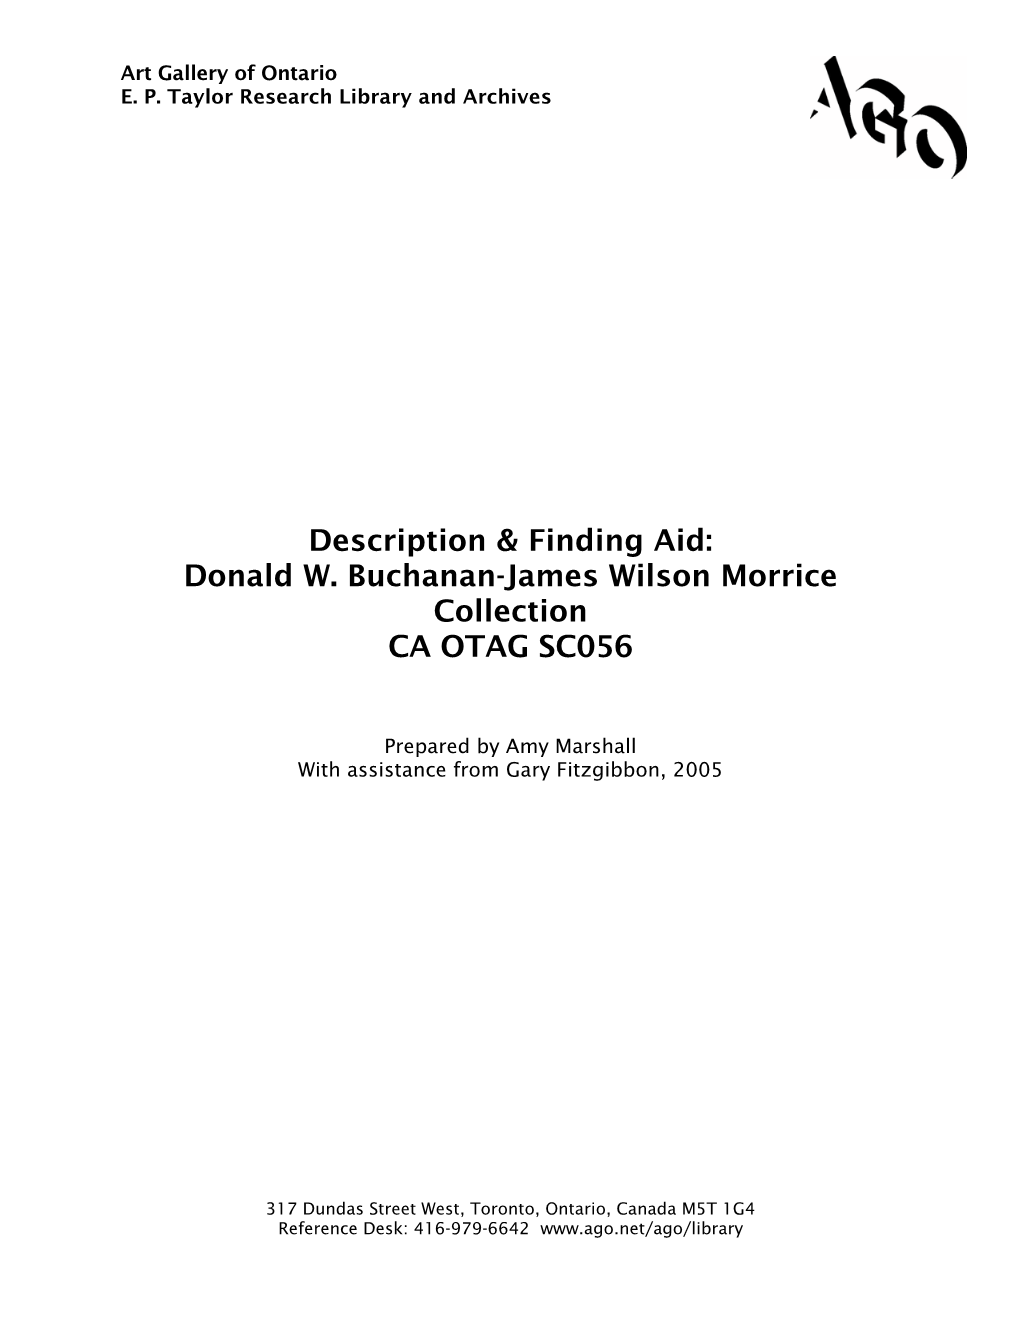 Description & Finding Aid: Donald W. Buchanan-James Wilson Morrice